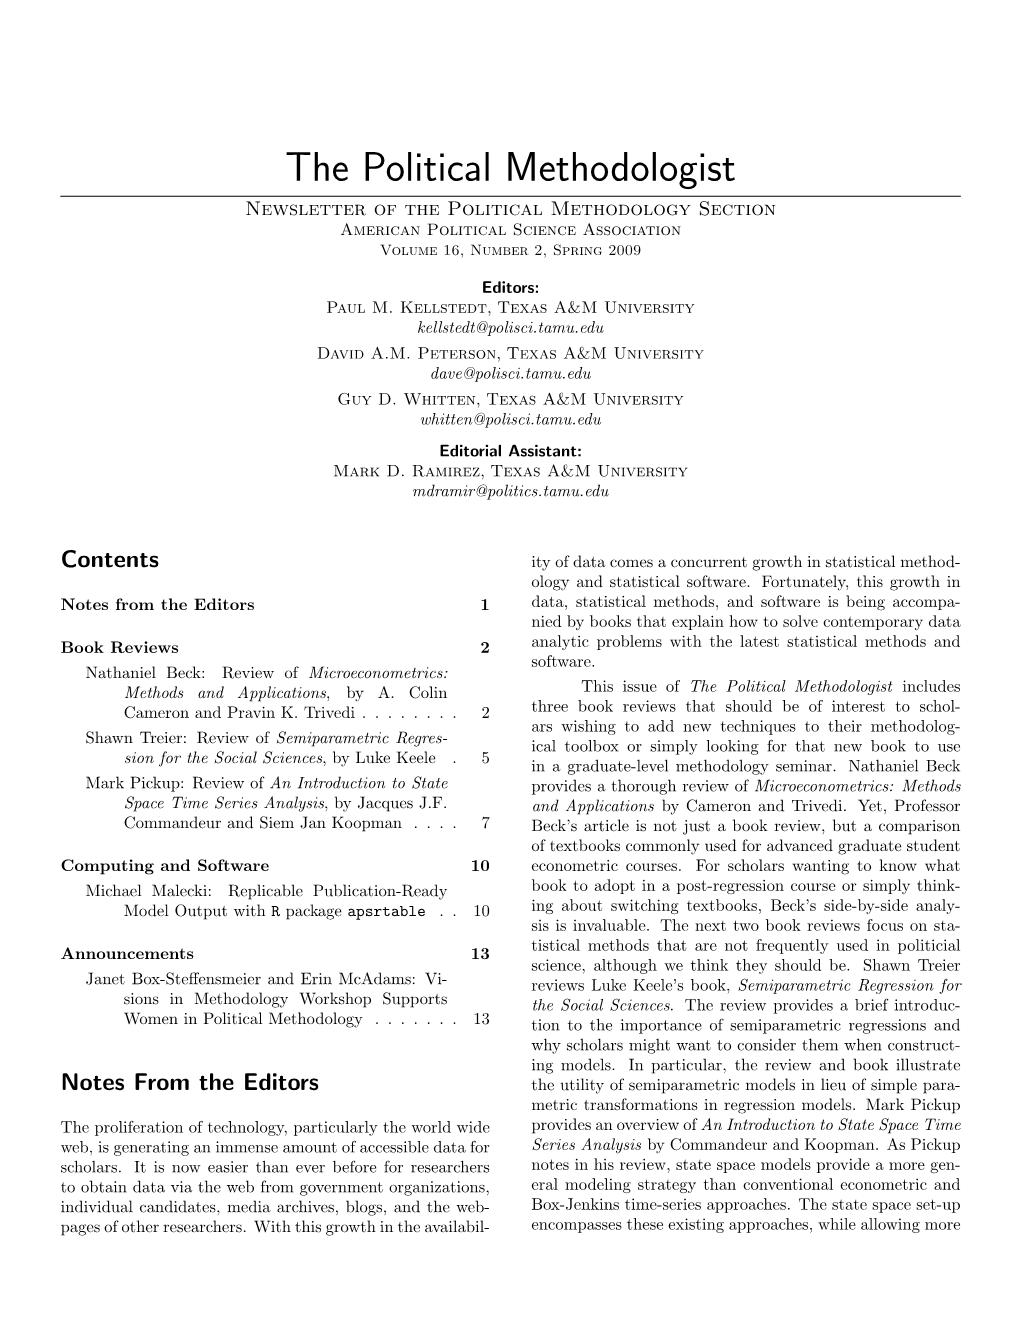 The Political Methodologist Newsletter of the Political Methodology Section American Political Science Association Volume 16, Number 2, Spring 2009